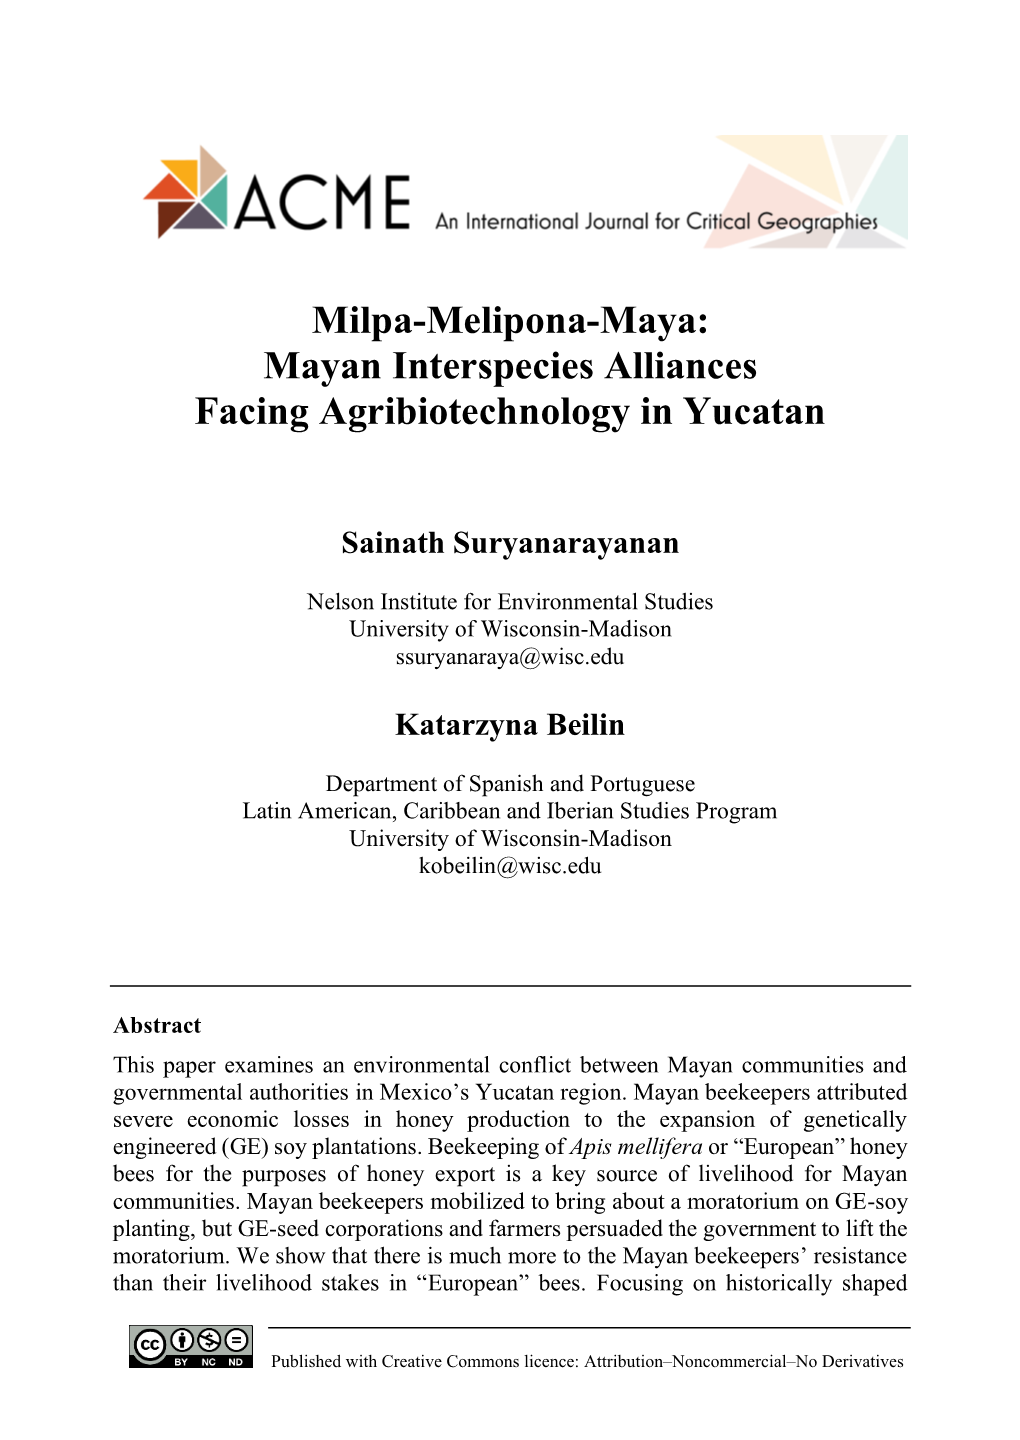 Milpa-Melipona-Maya: Mayan Interspecies Alliances Facing Agribiotechnology in Yucatan